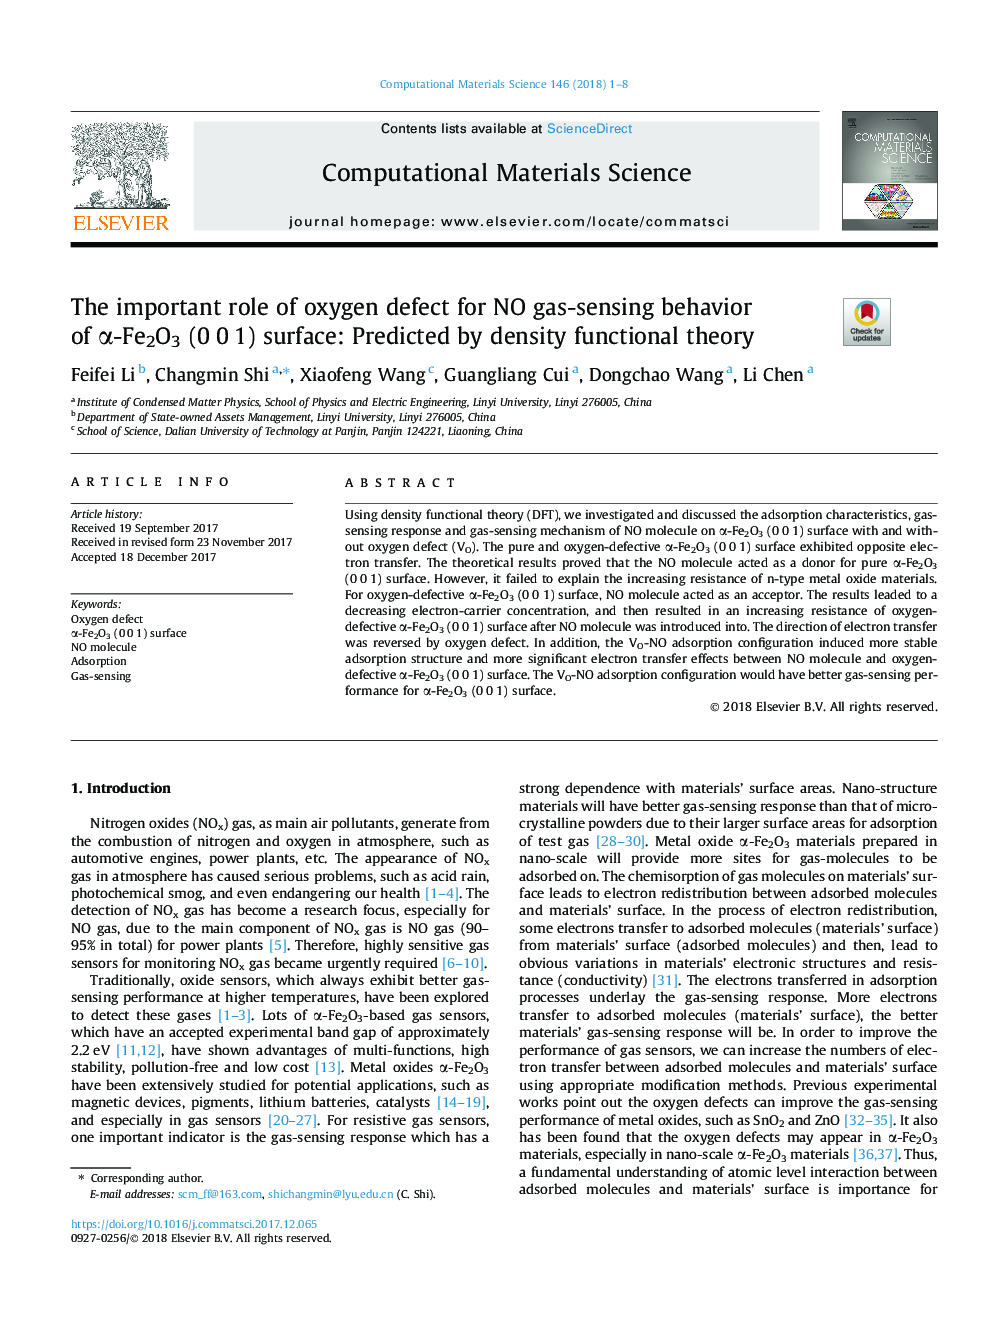 The important role of oxygen defect for NO gas-sensing behavior of Î±-Fe2O3 (0â¯0â¯1) surface: Predicted by density functional theory